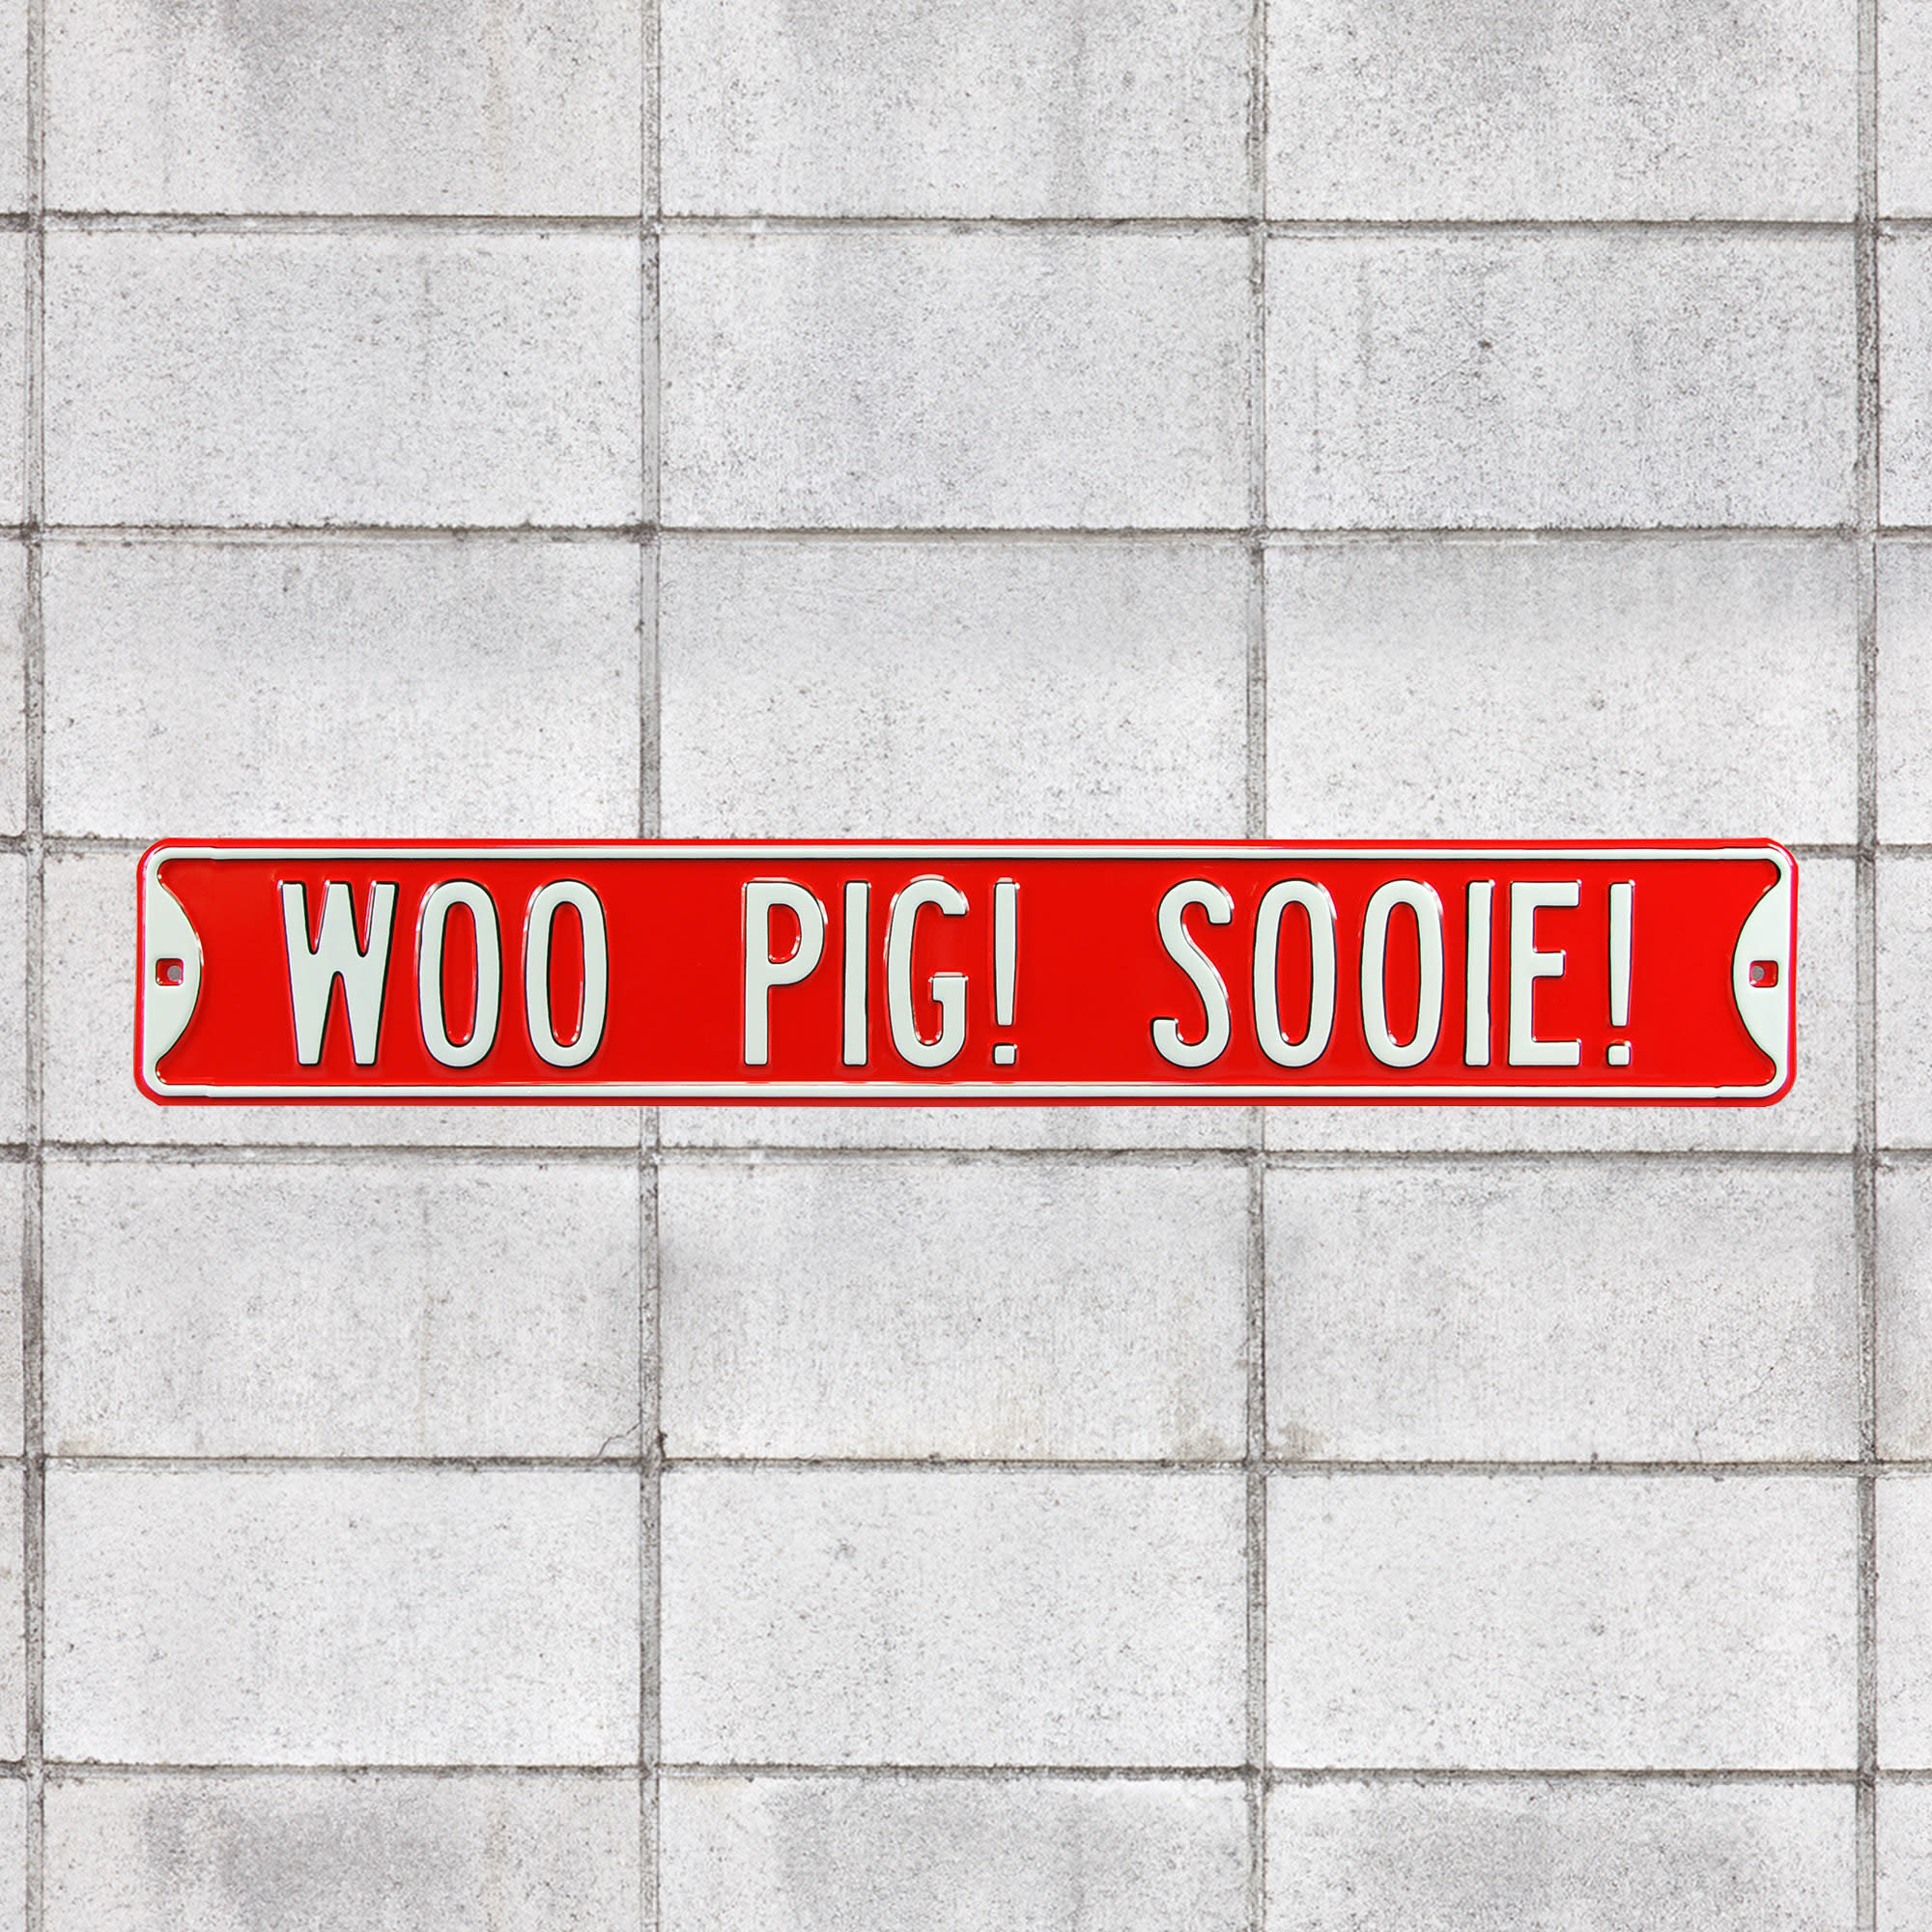 Arkansas Razorbacks: Woo Pig Sooie - Officially Licensed Metal Street Sign 36.0"W x 6.0"H by Fathead | 100% Steel